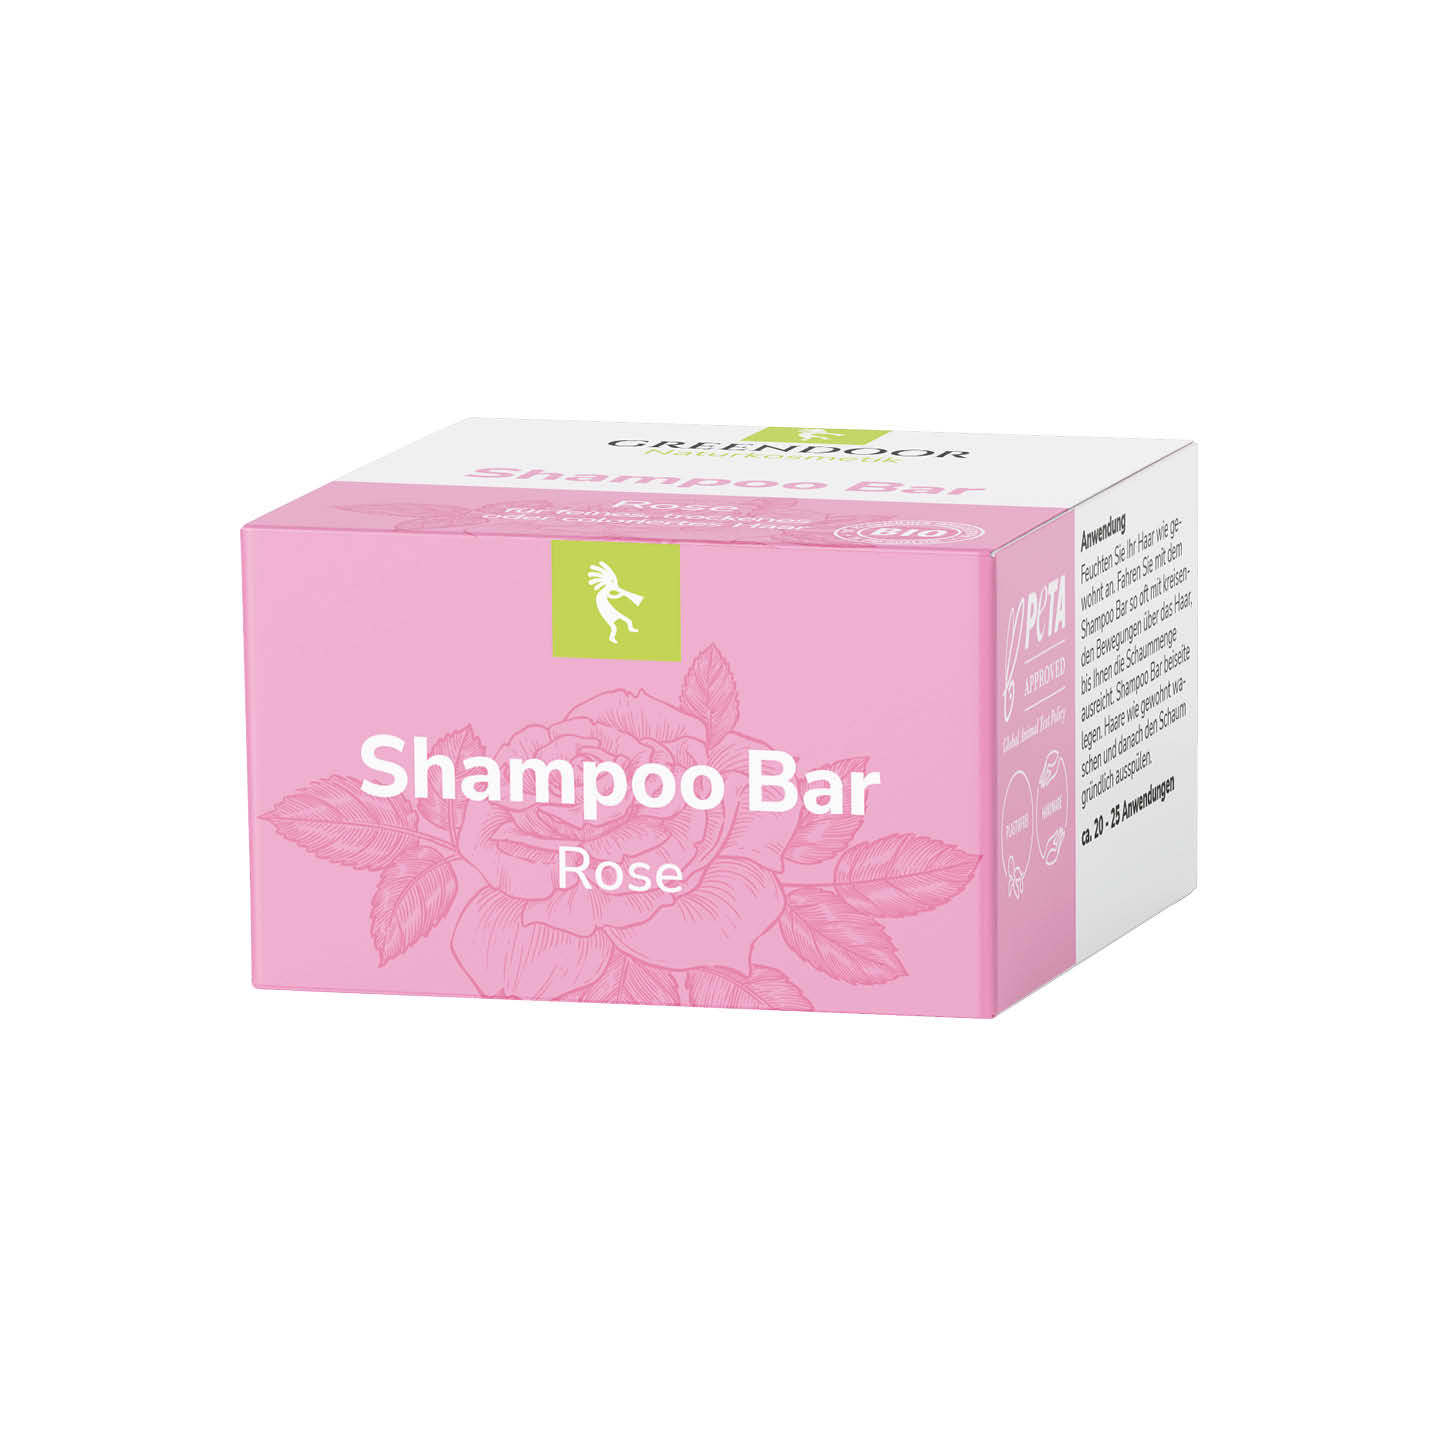 Veganer Shampoo Bar Rose 75g, solid Shampoo ohne Sufate, mit rosa Kristallsalz